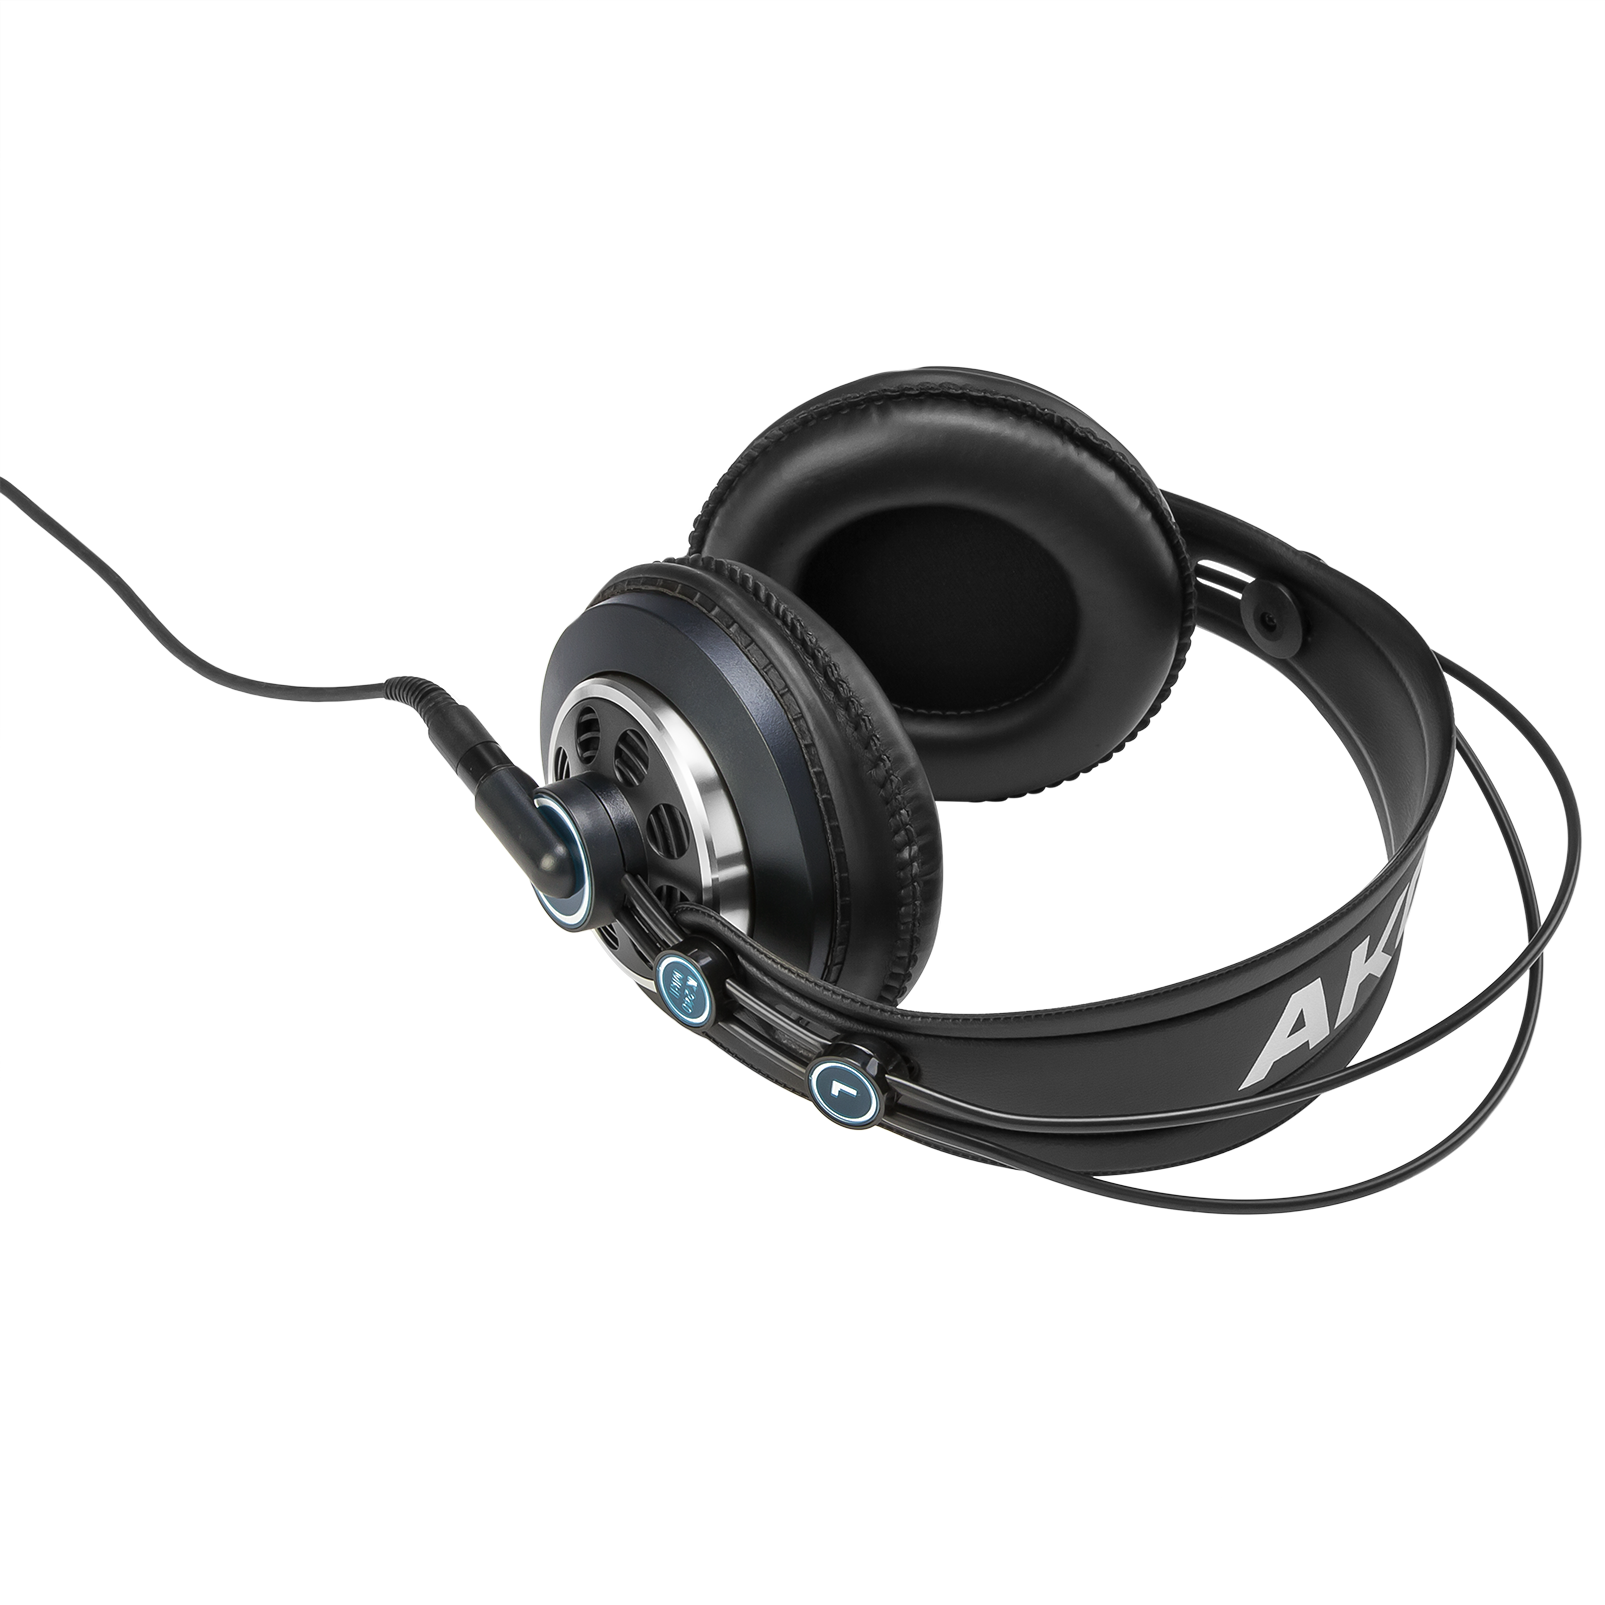 K240 MKII (B-Stock) - Black - Professional studio headphones  - Detailshot 2